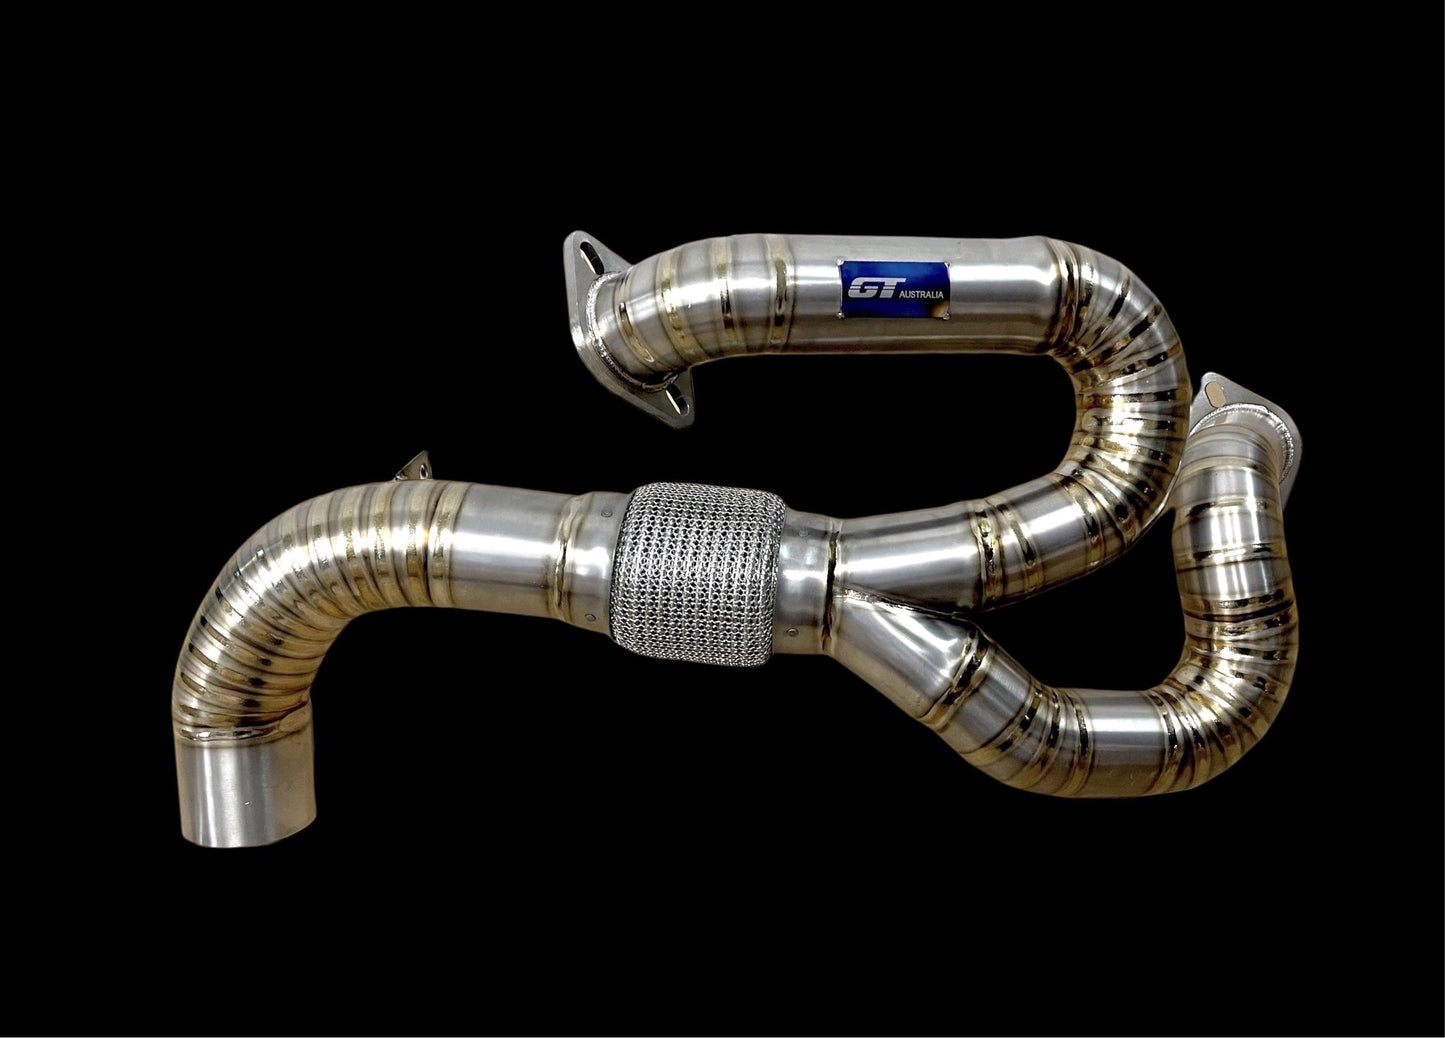 Lotus Exige CUP430 titanium y-pipe by GT Australia